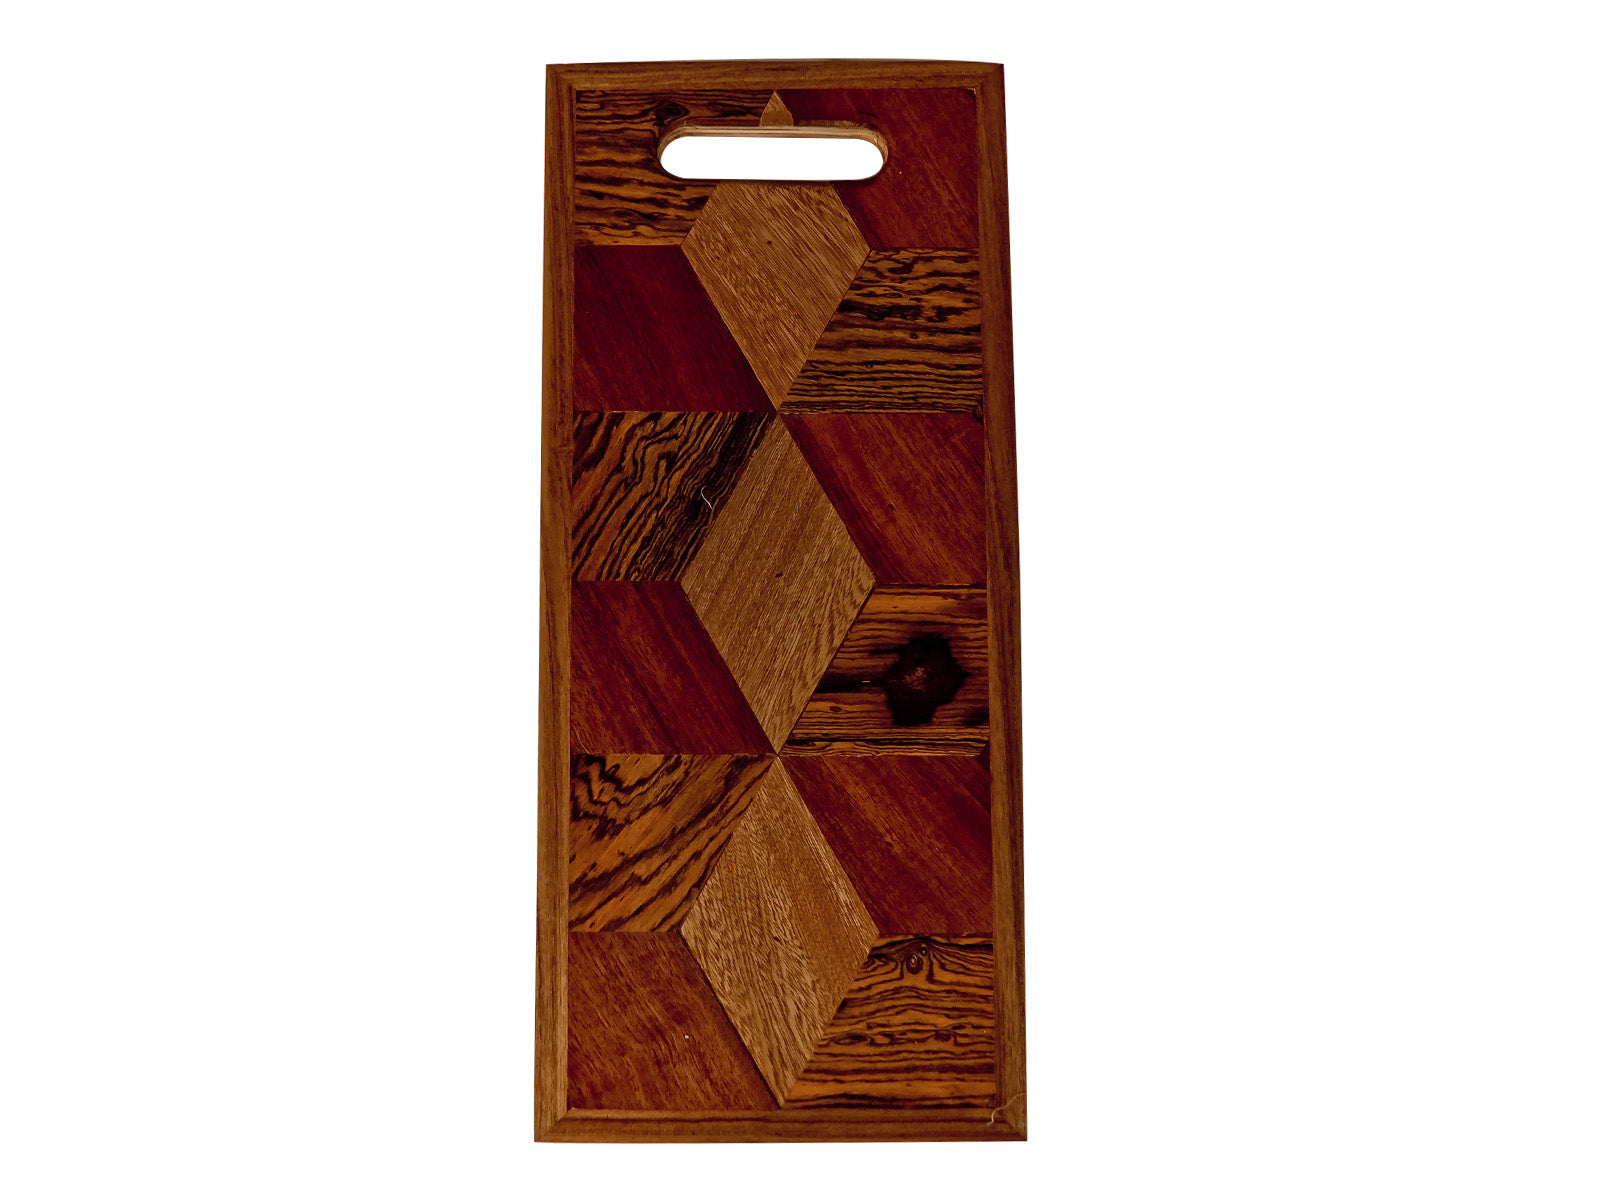 Wooden Cutting Board Tiles Set